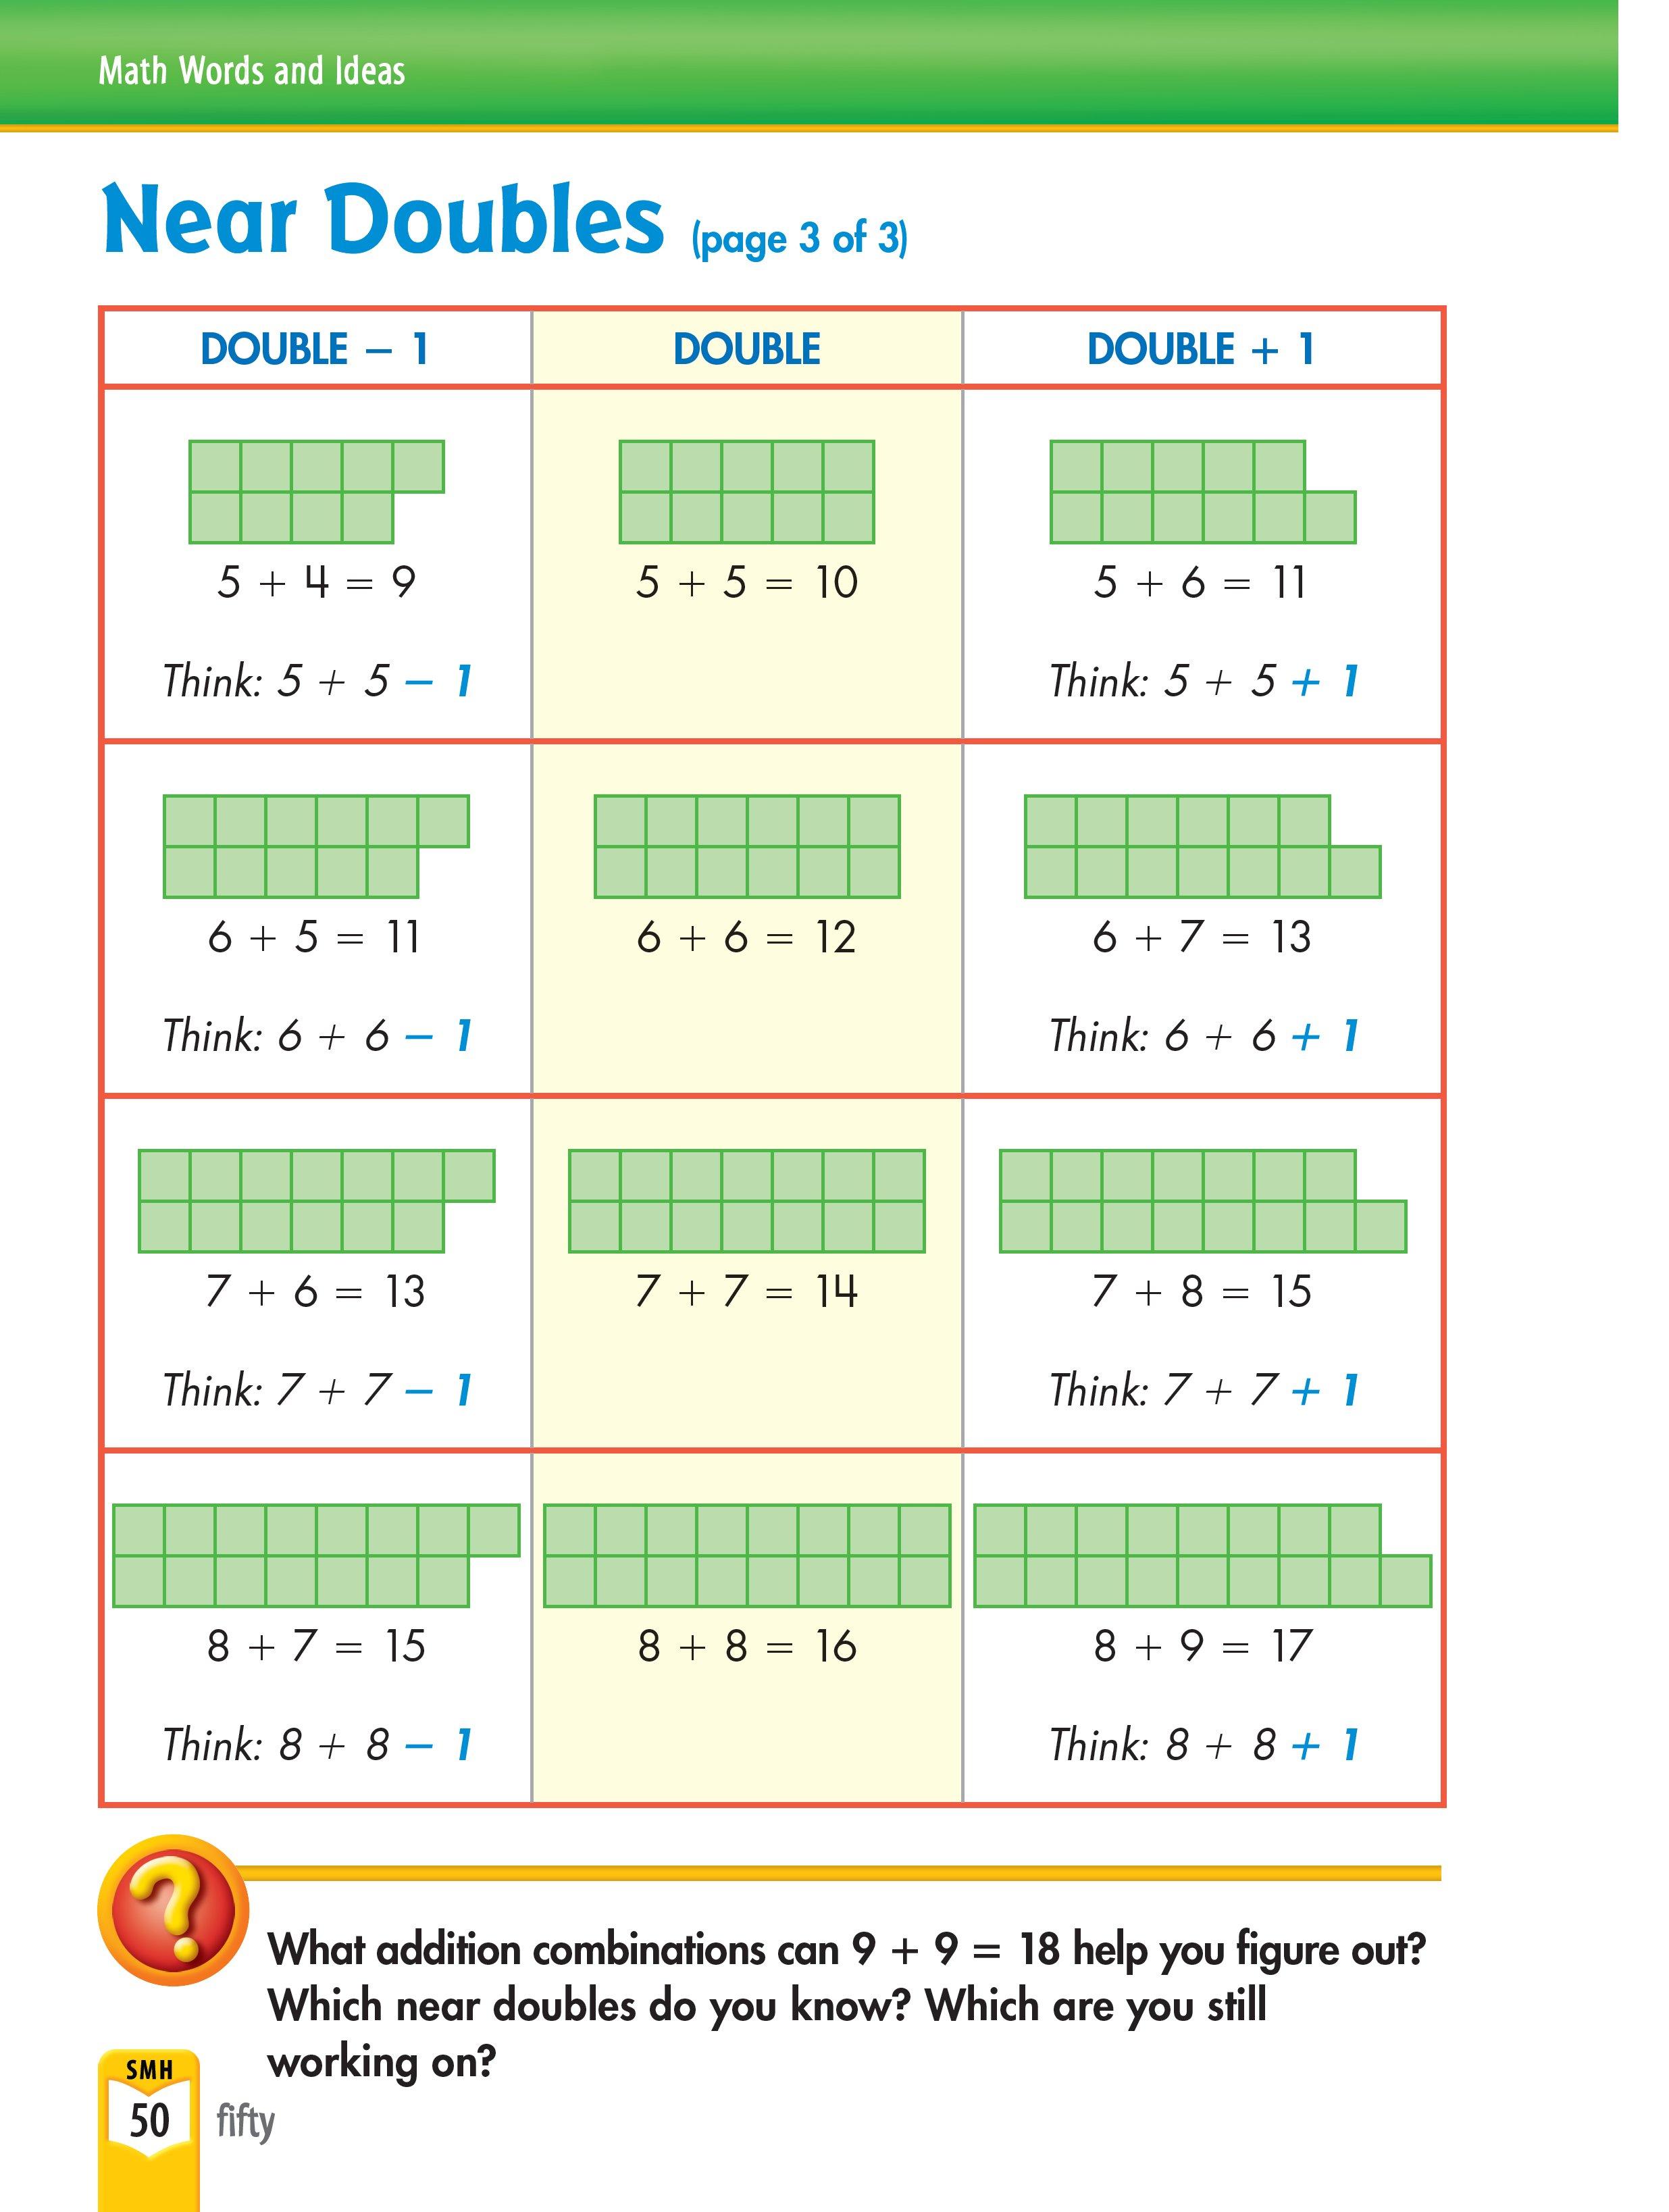 Math table of near doubles